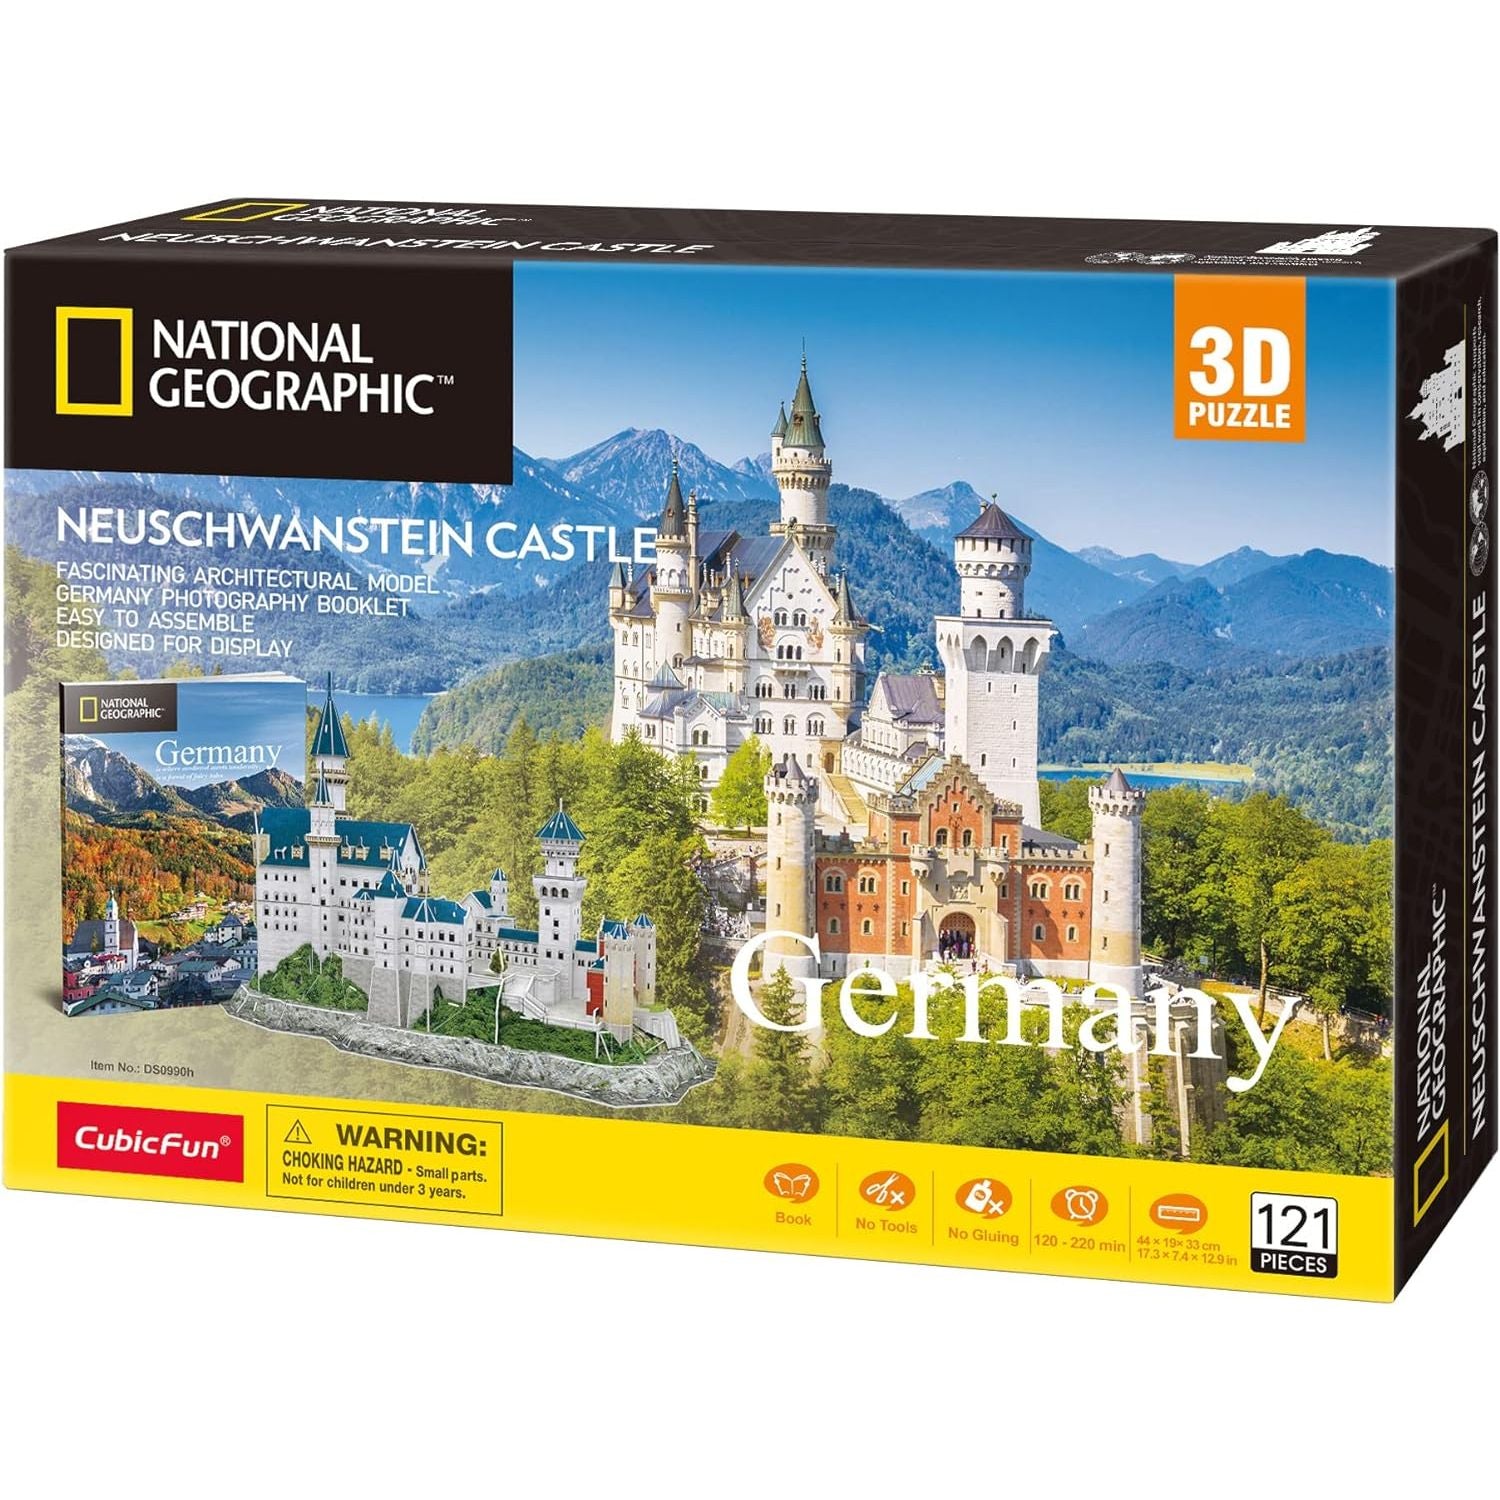 CubicFun National Geographic 3D Puzzle - Neuschwanstein Castle 121 Pcs with a Booklet